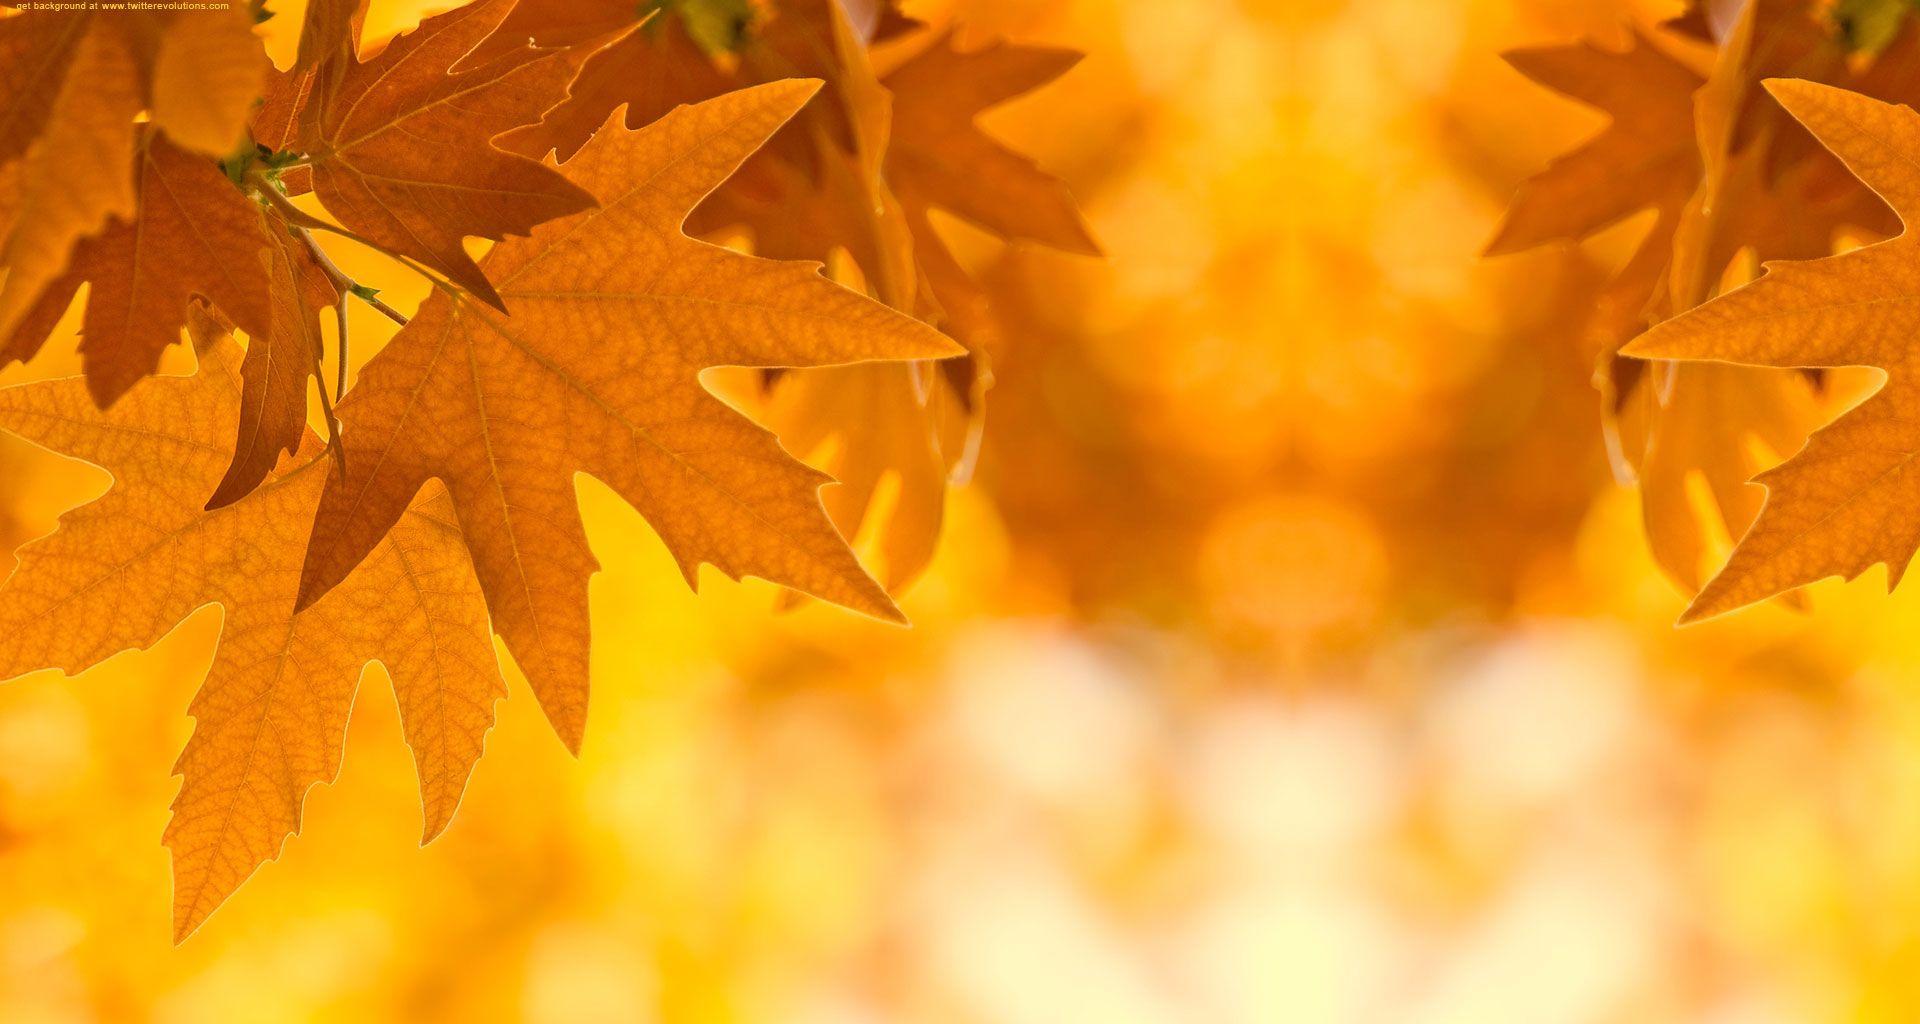 Fall Leaves Tumblr - wallpaper.